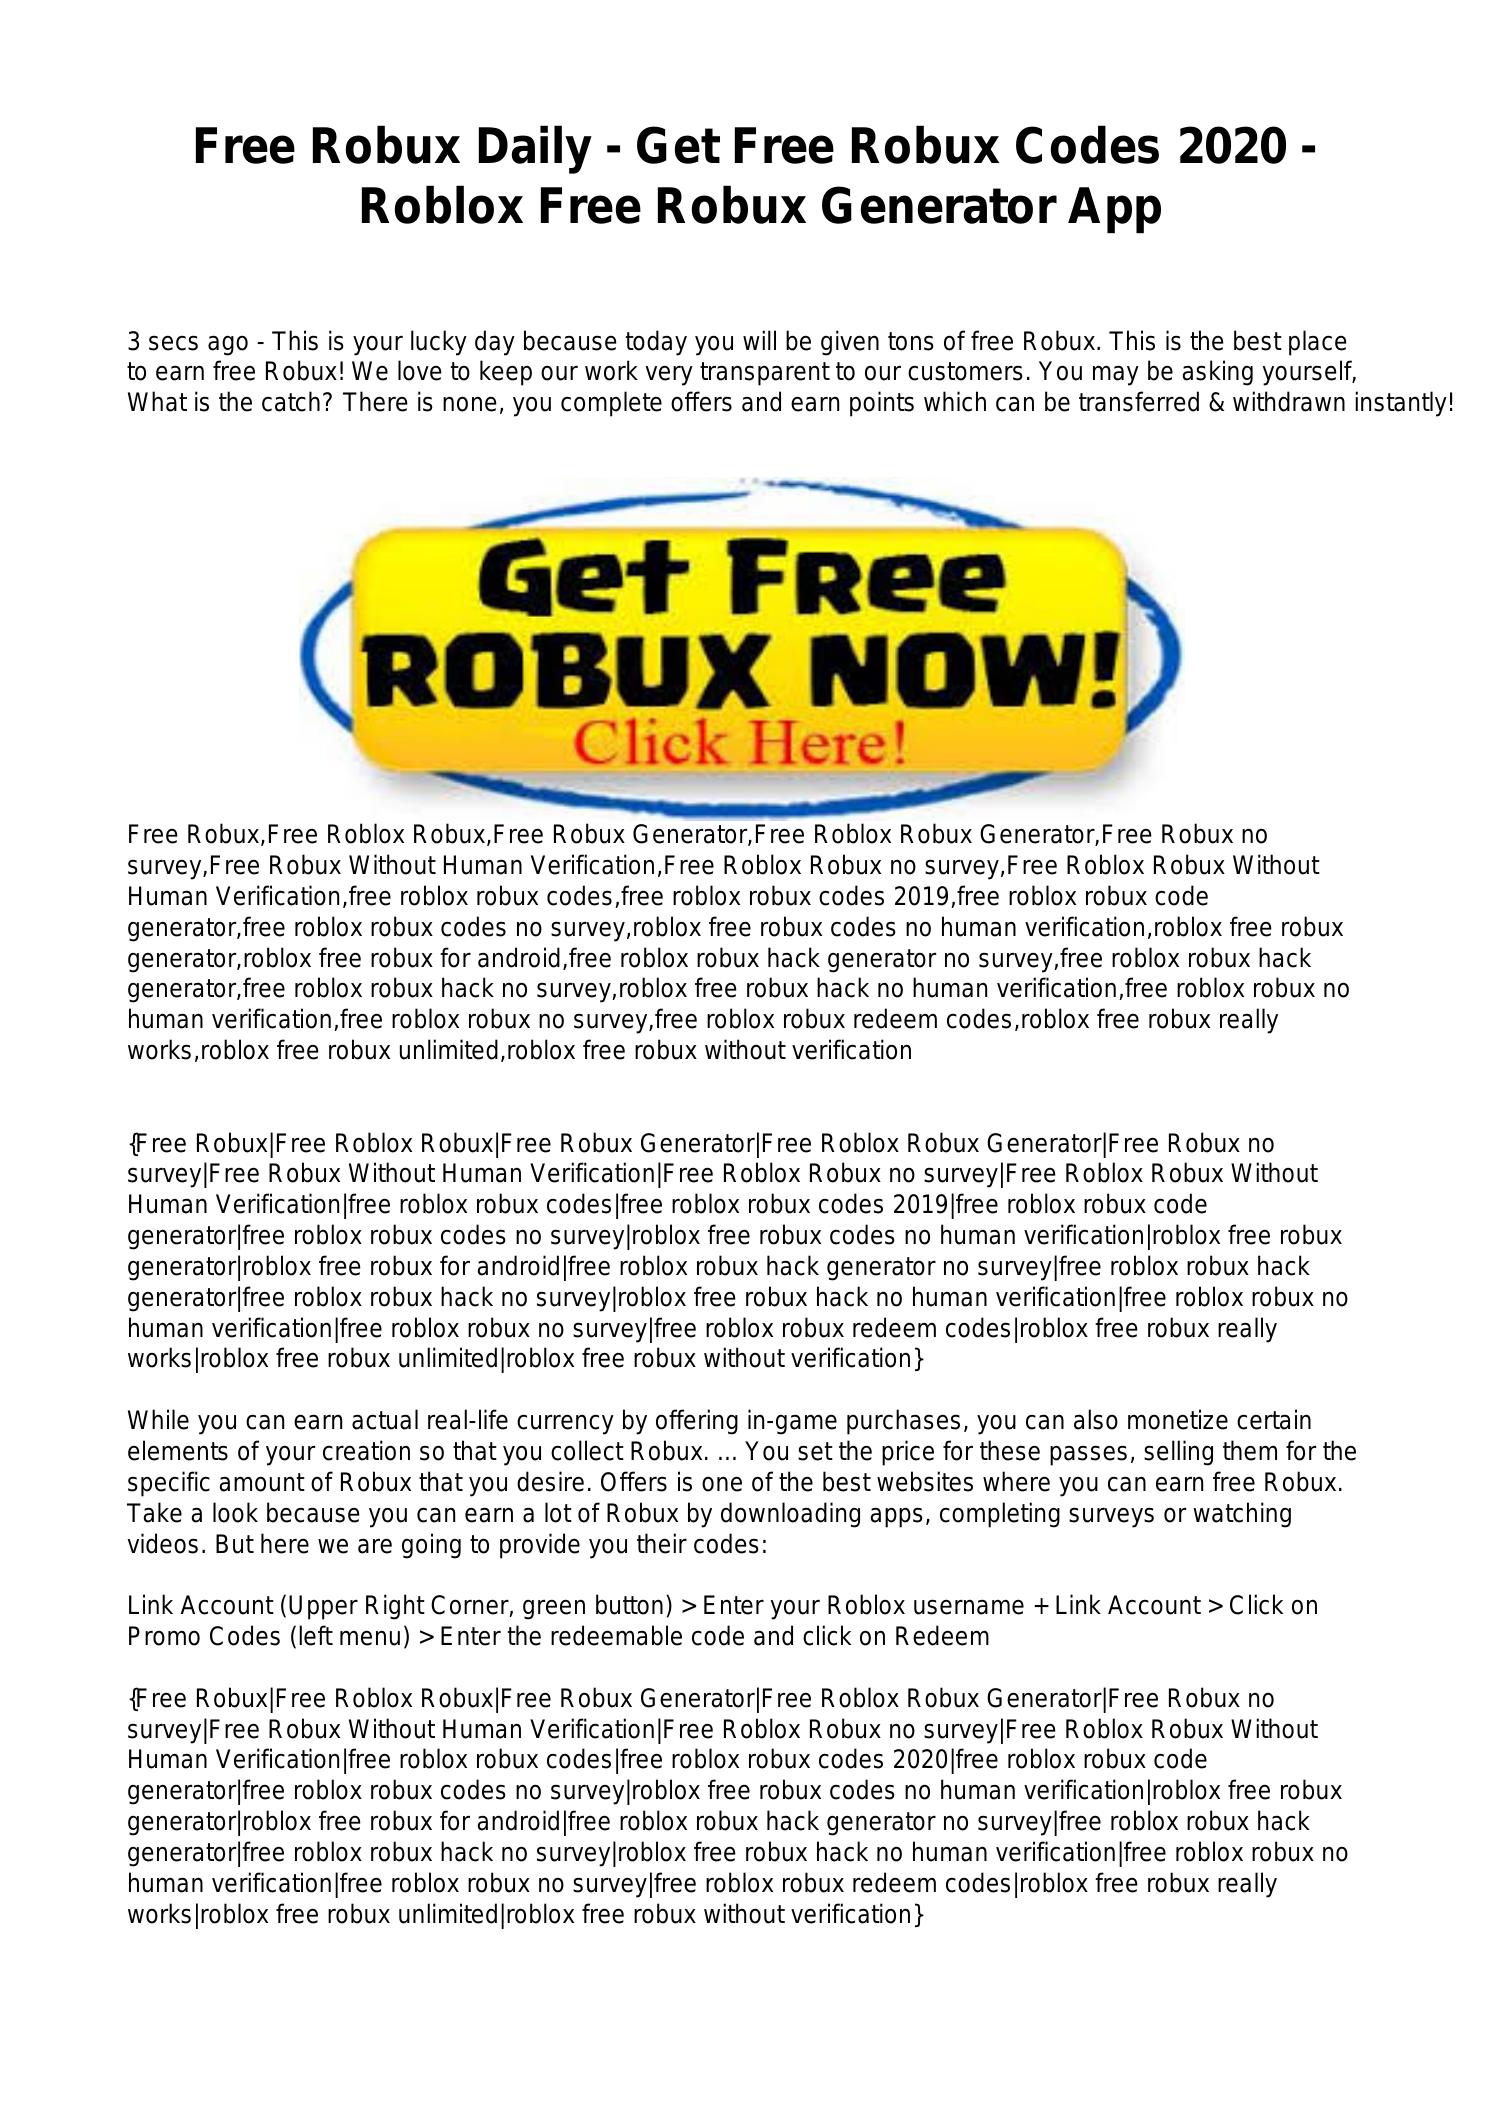 Promo Code Roblox Free Robux